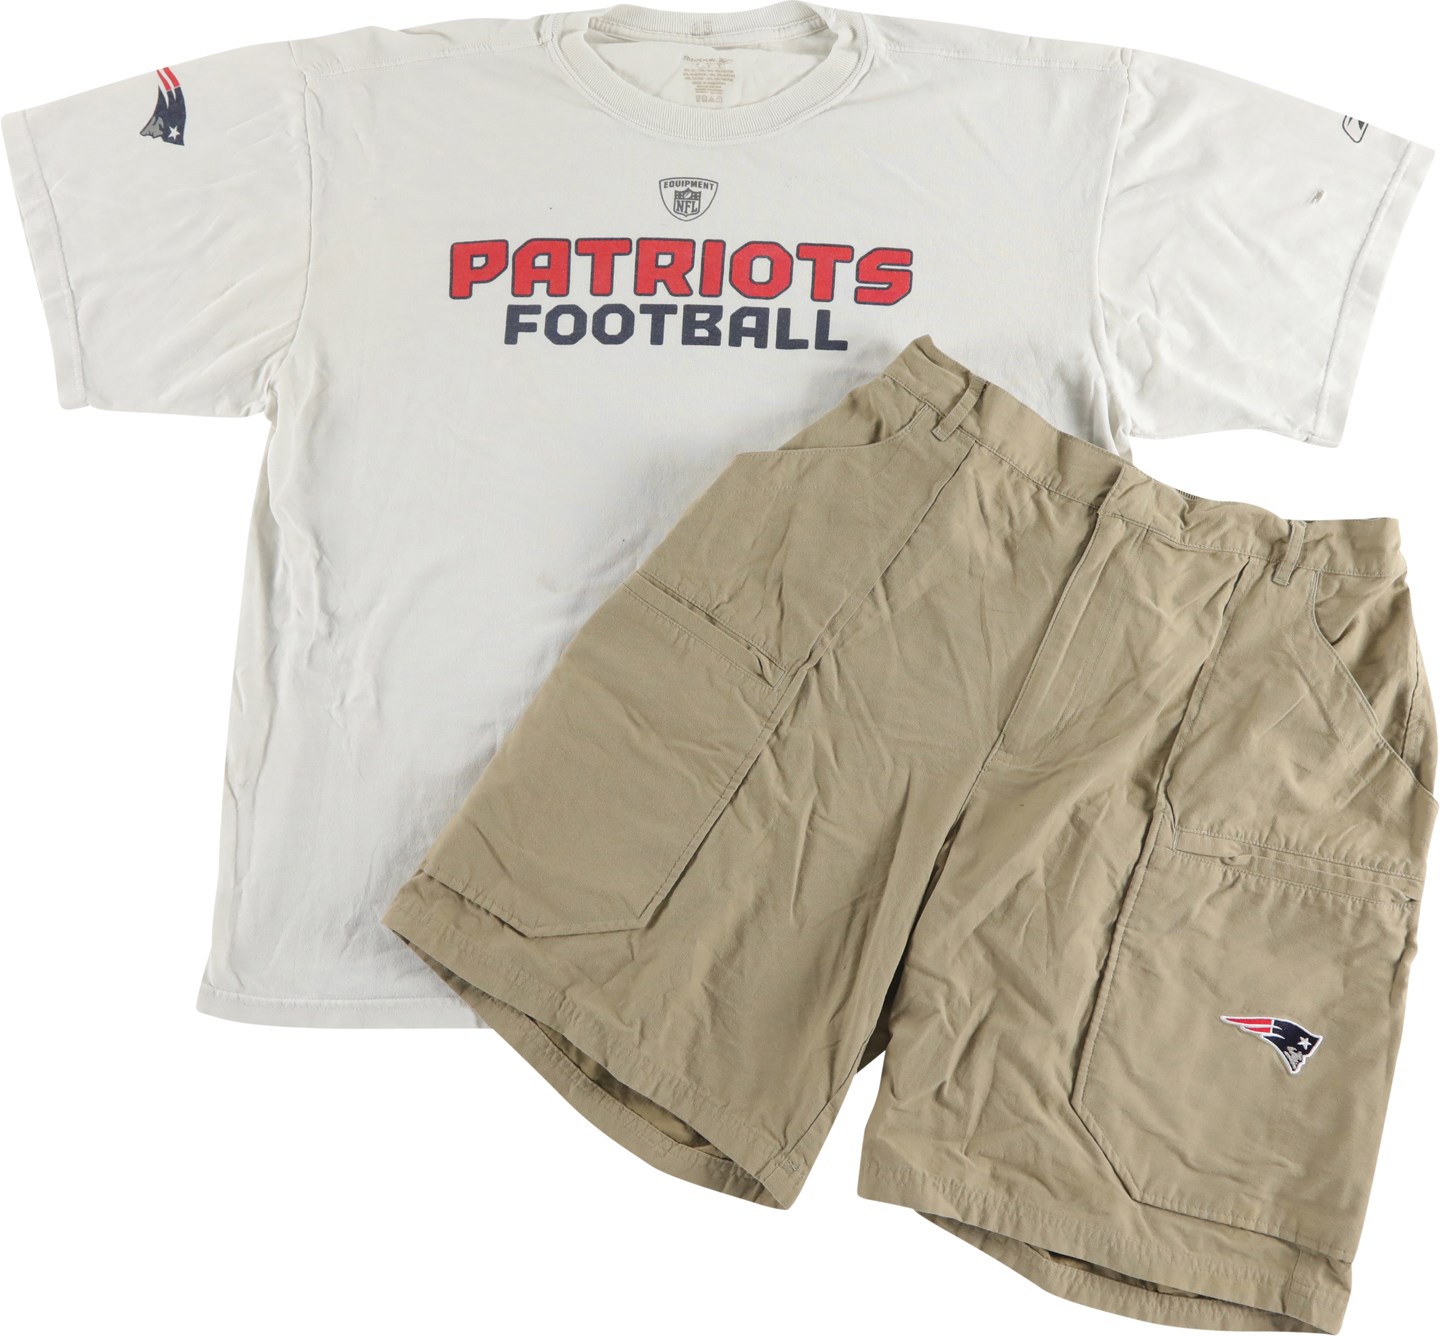 Football - Rare Bill Belichick Worn New England Patriots Practice Shirt and Shorts